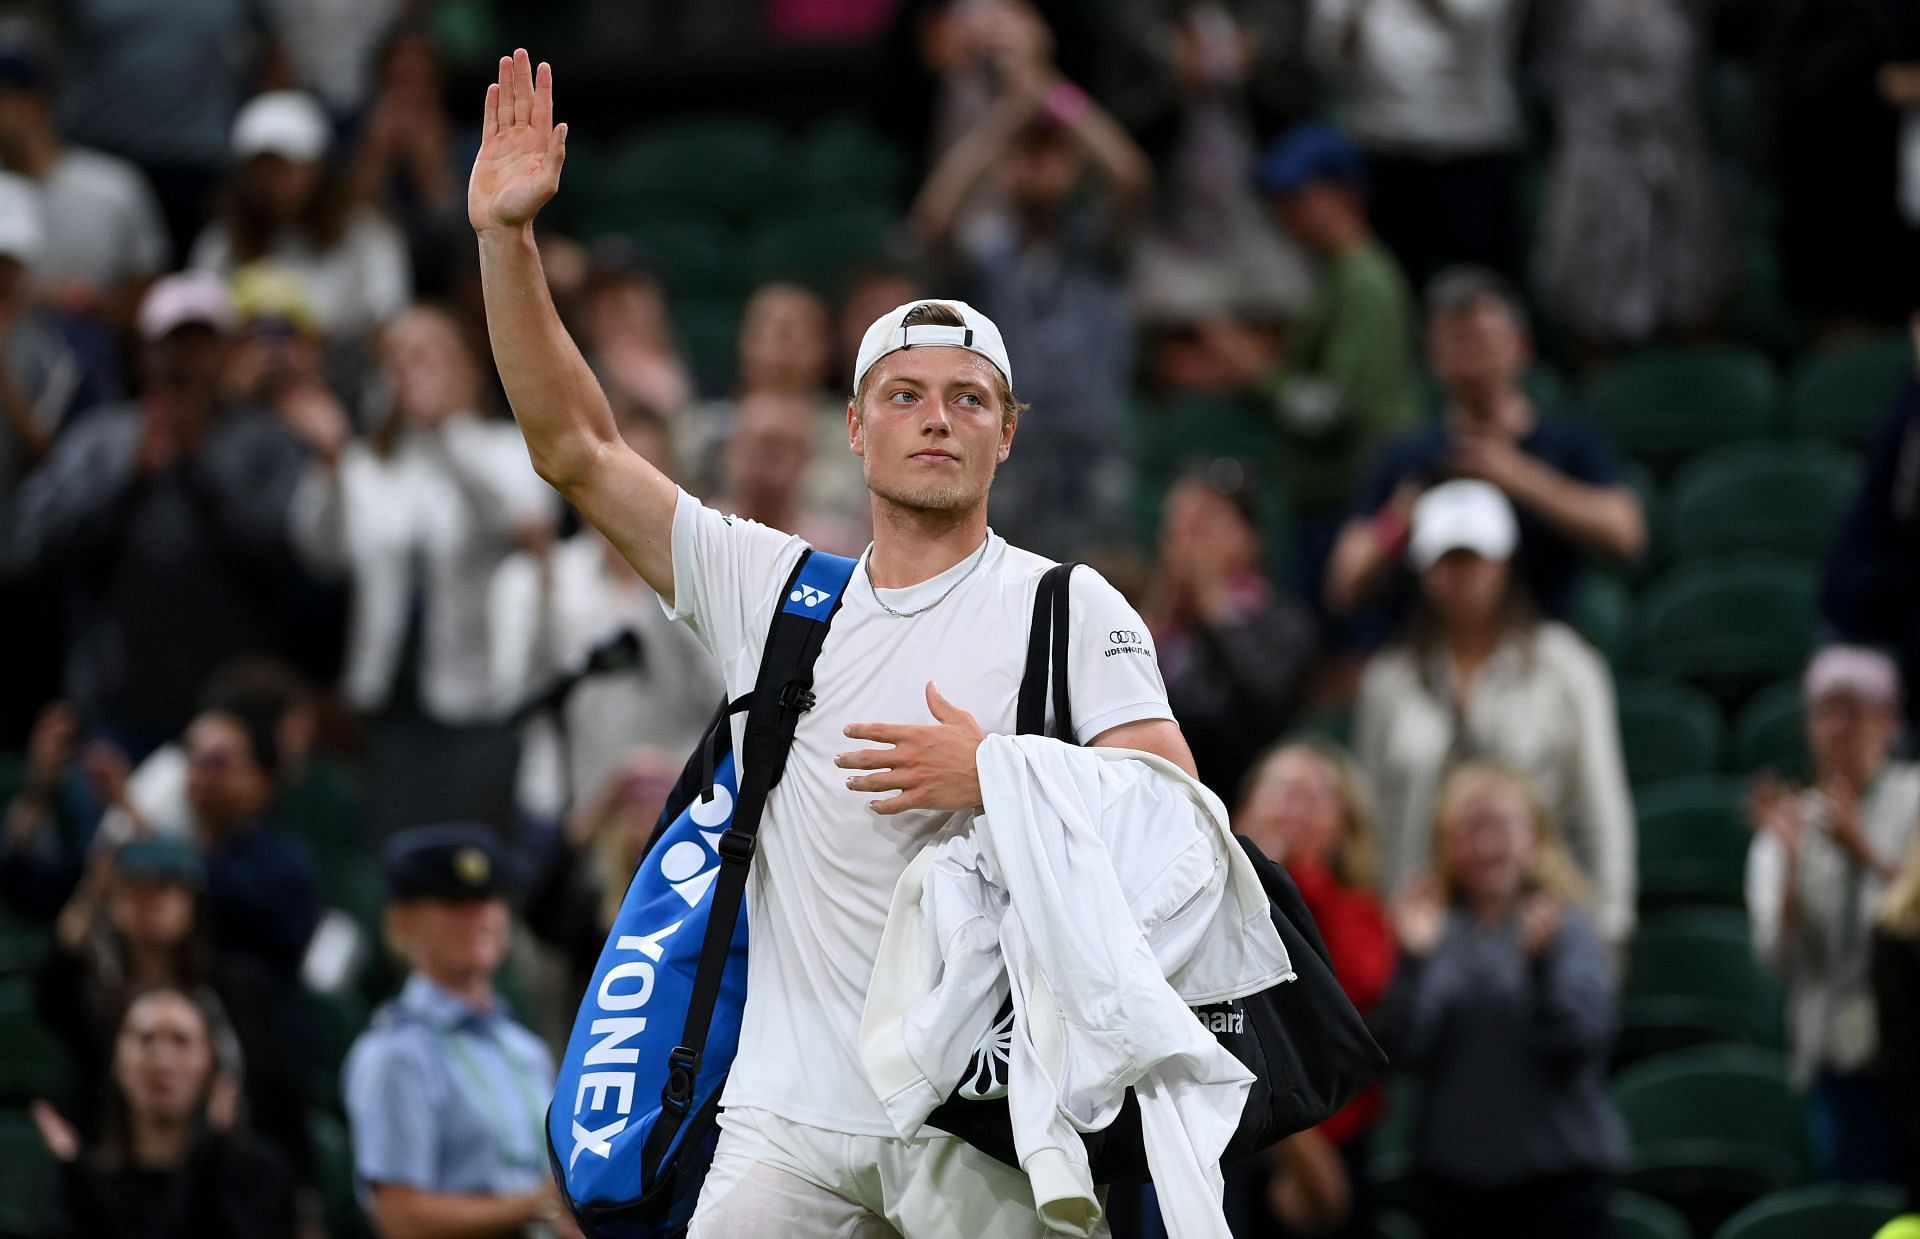 Tim van Rijthoven thanks the crowd after his Wimbledon 2022 match against Novak Djokovic.